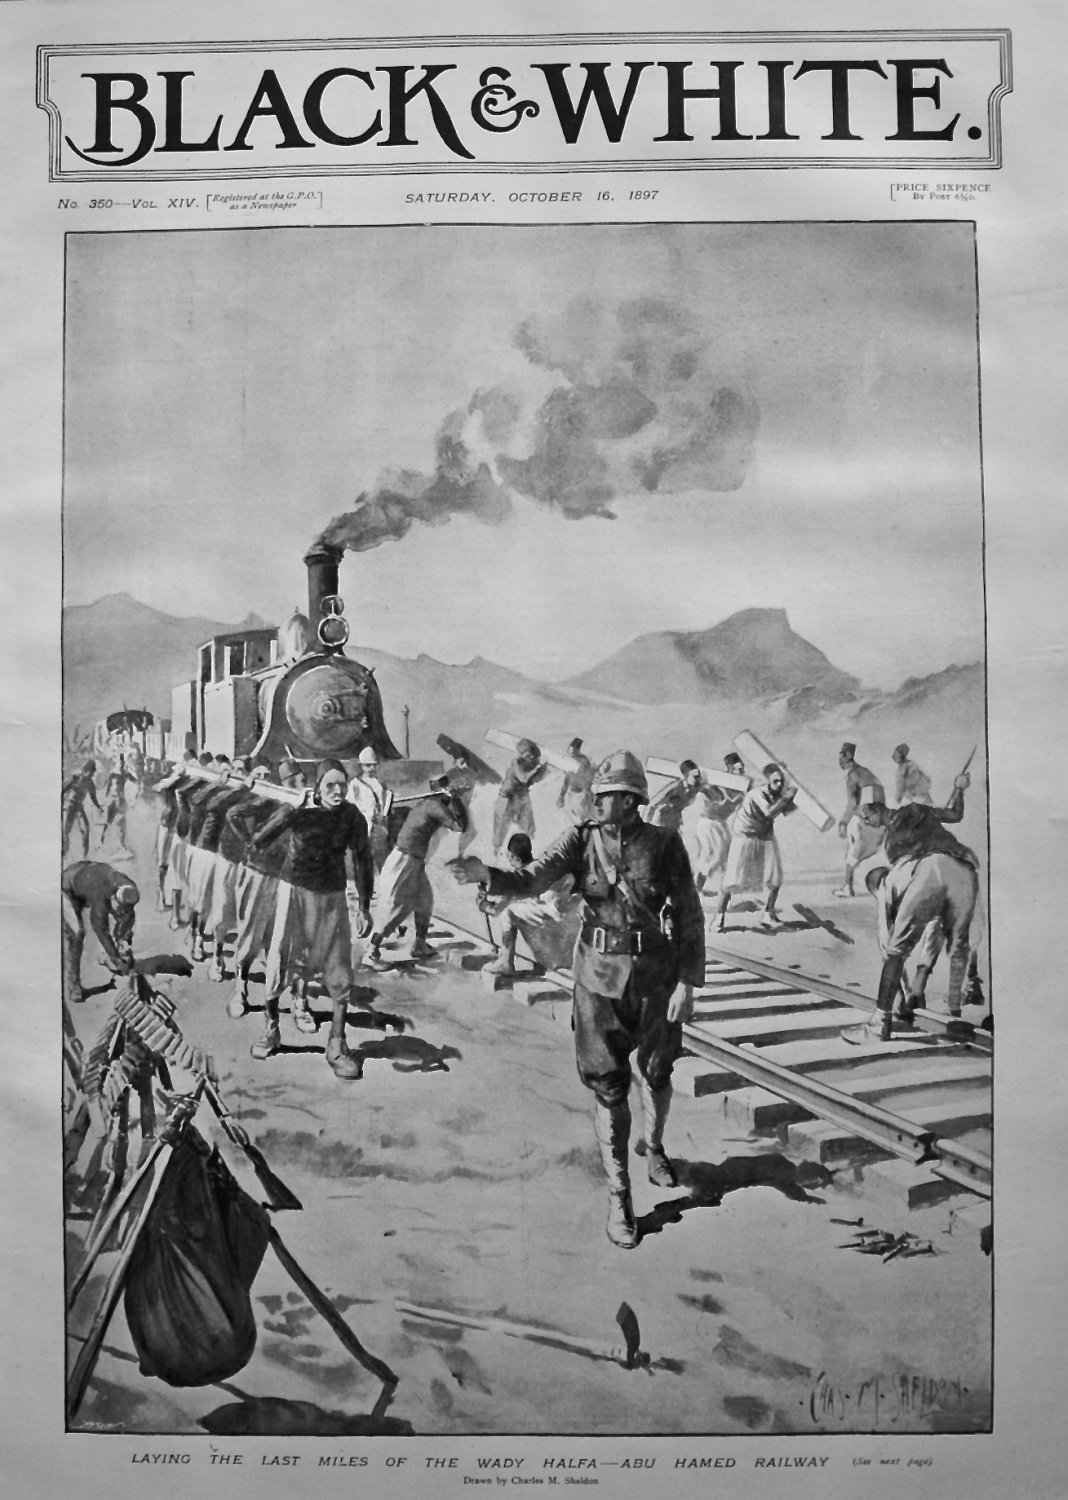 Laying the Last Miles of the Wady Halfa - Abu Hamed Railway. 1897.